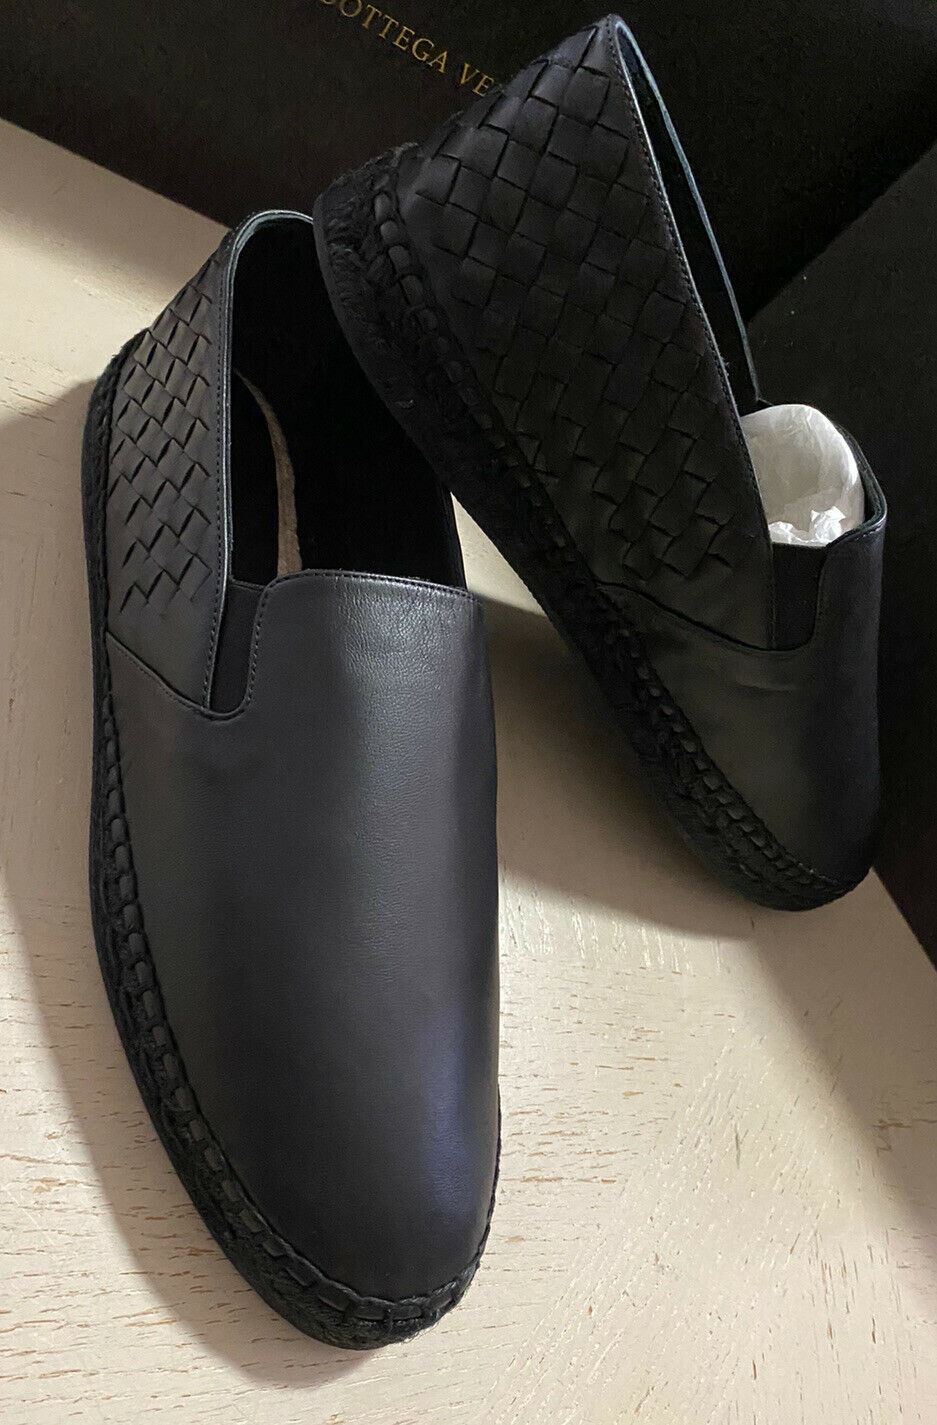 New $690 Bottega Veneta Men Leather Espadrille Shoes Black 13 US ( 46 Eu )